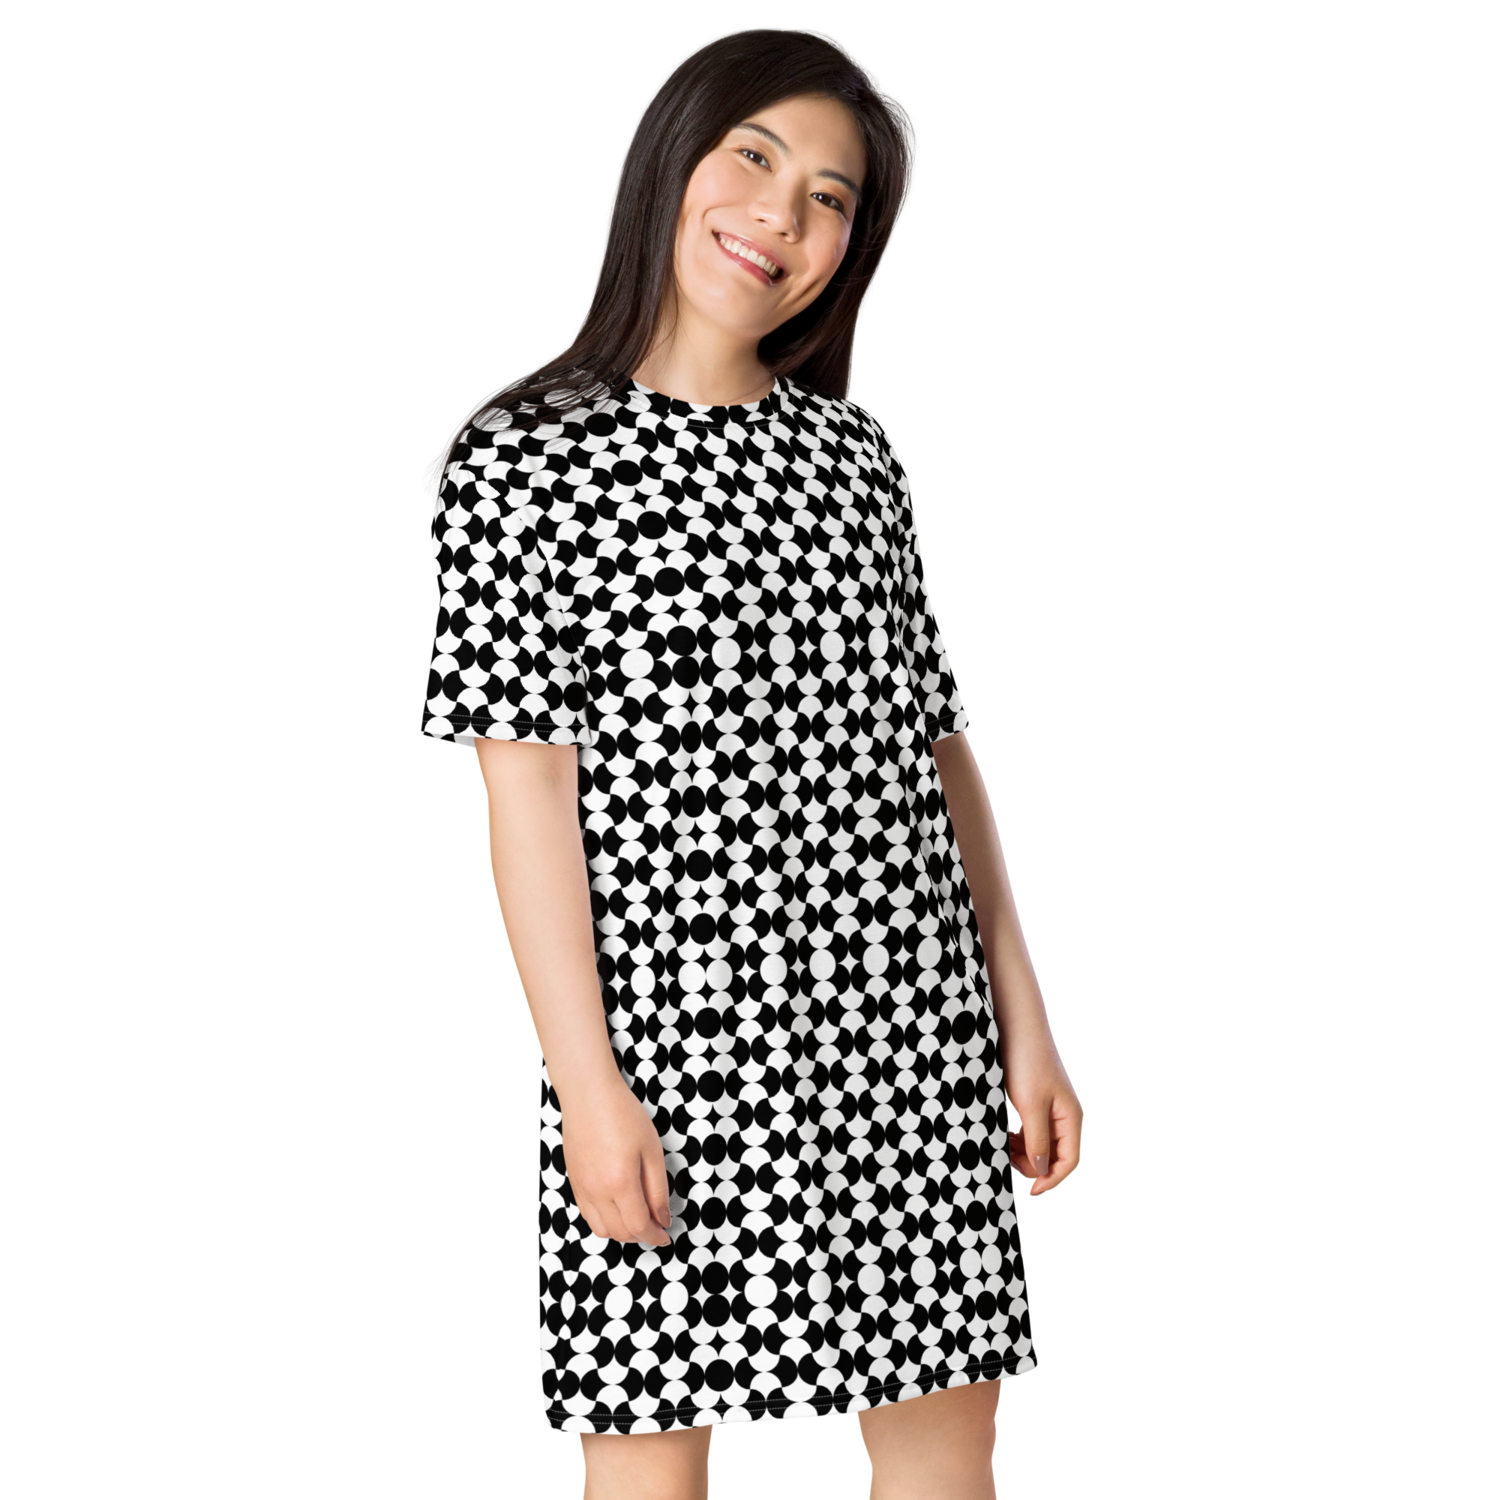 T-shirt Dress Monochrome Short Sleeves Style #5